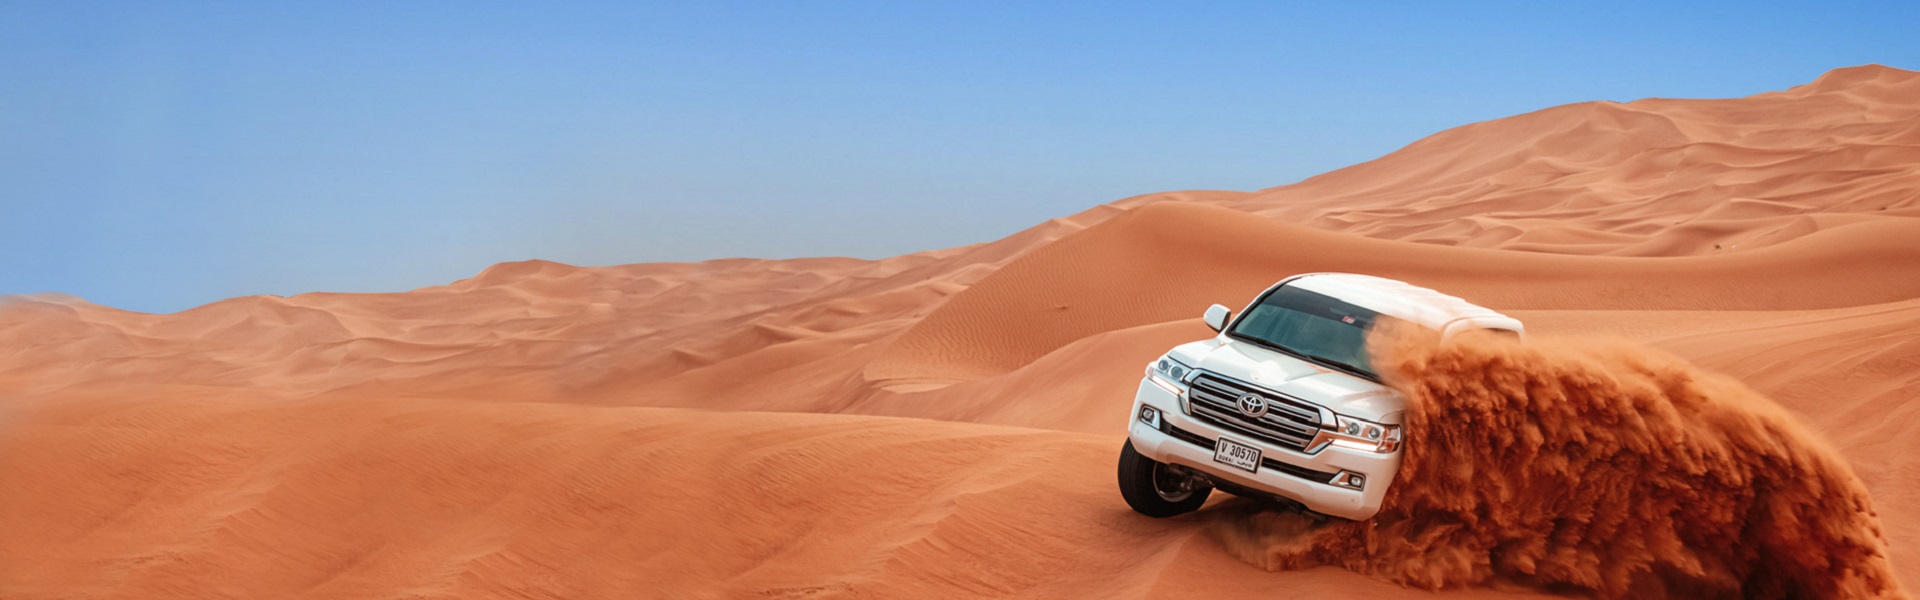 Rent a car Dubai | Desert safari in Dubai